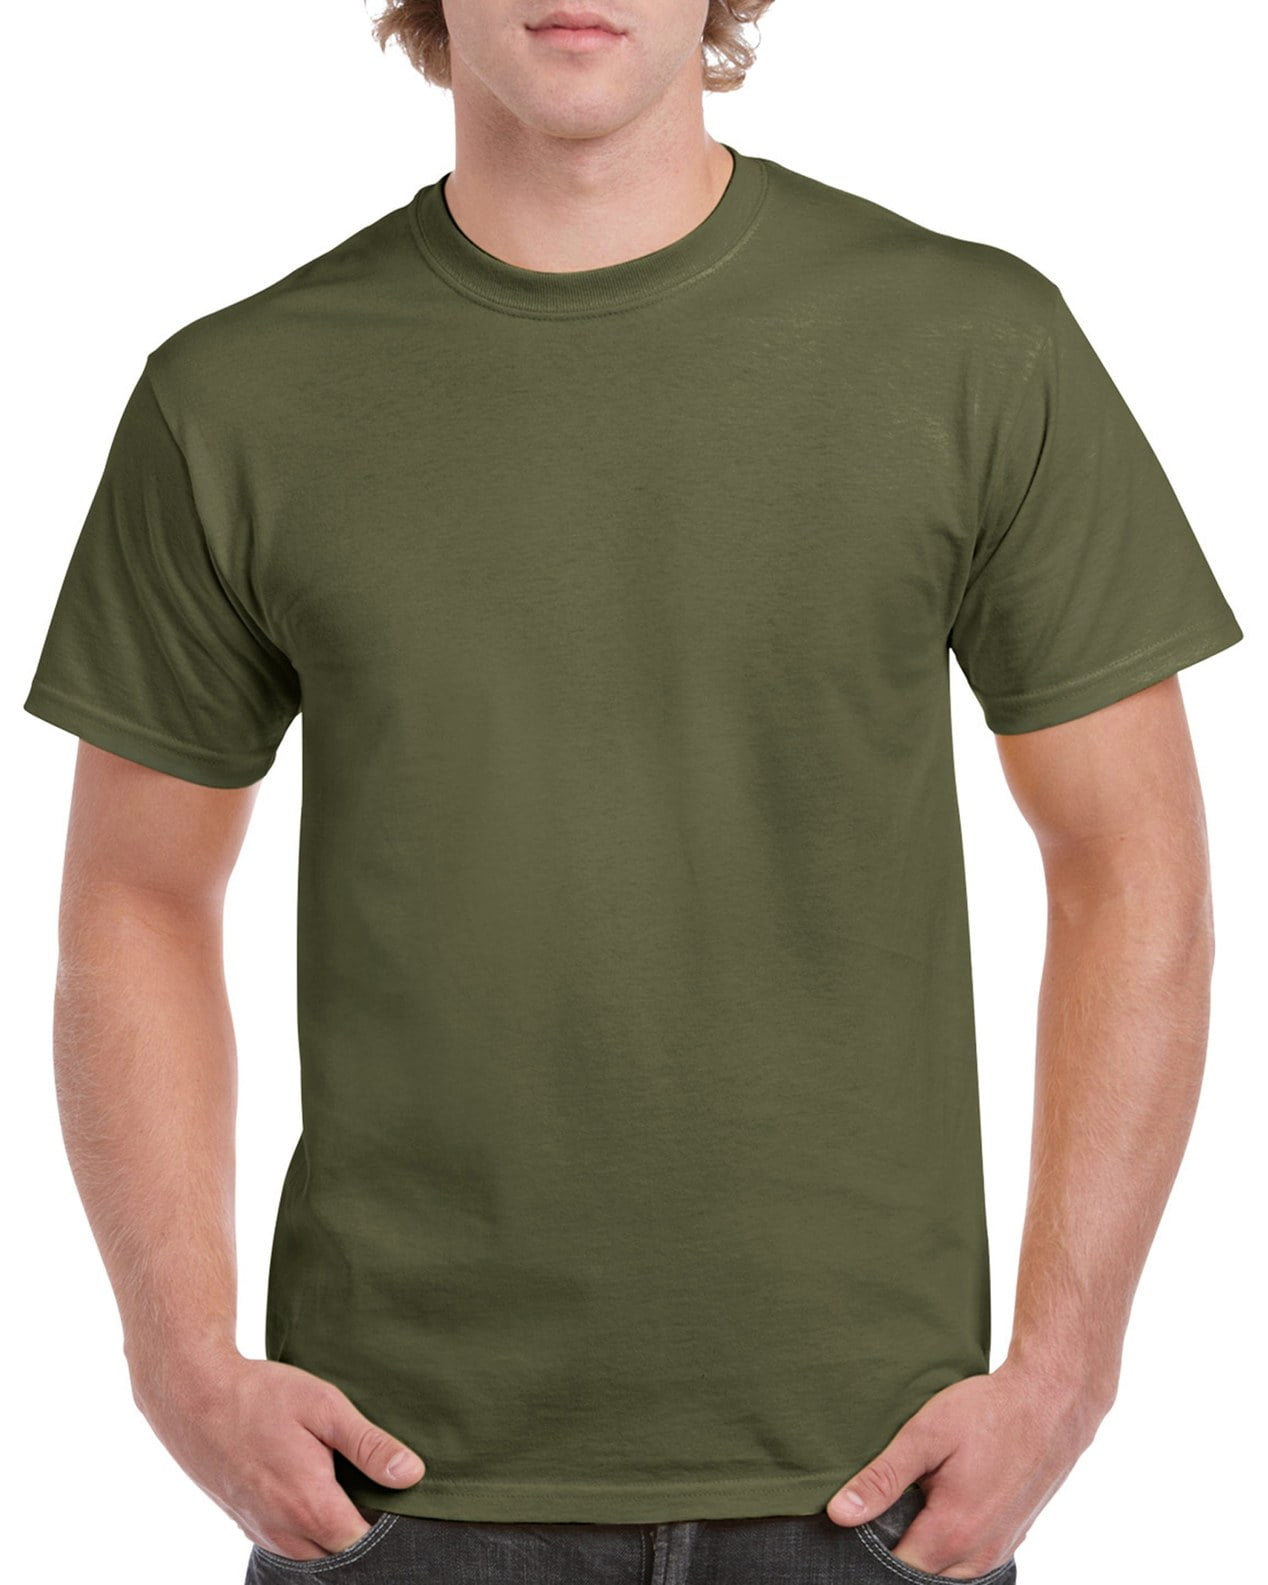 army green t shirt mens